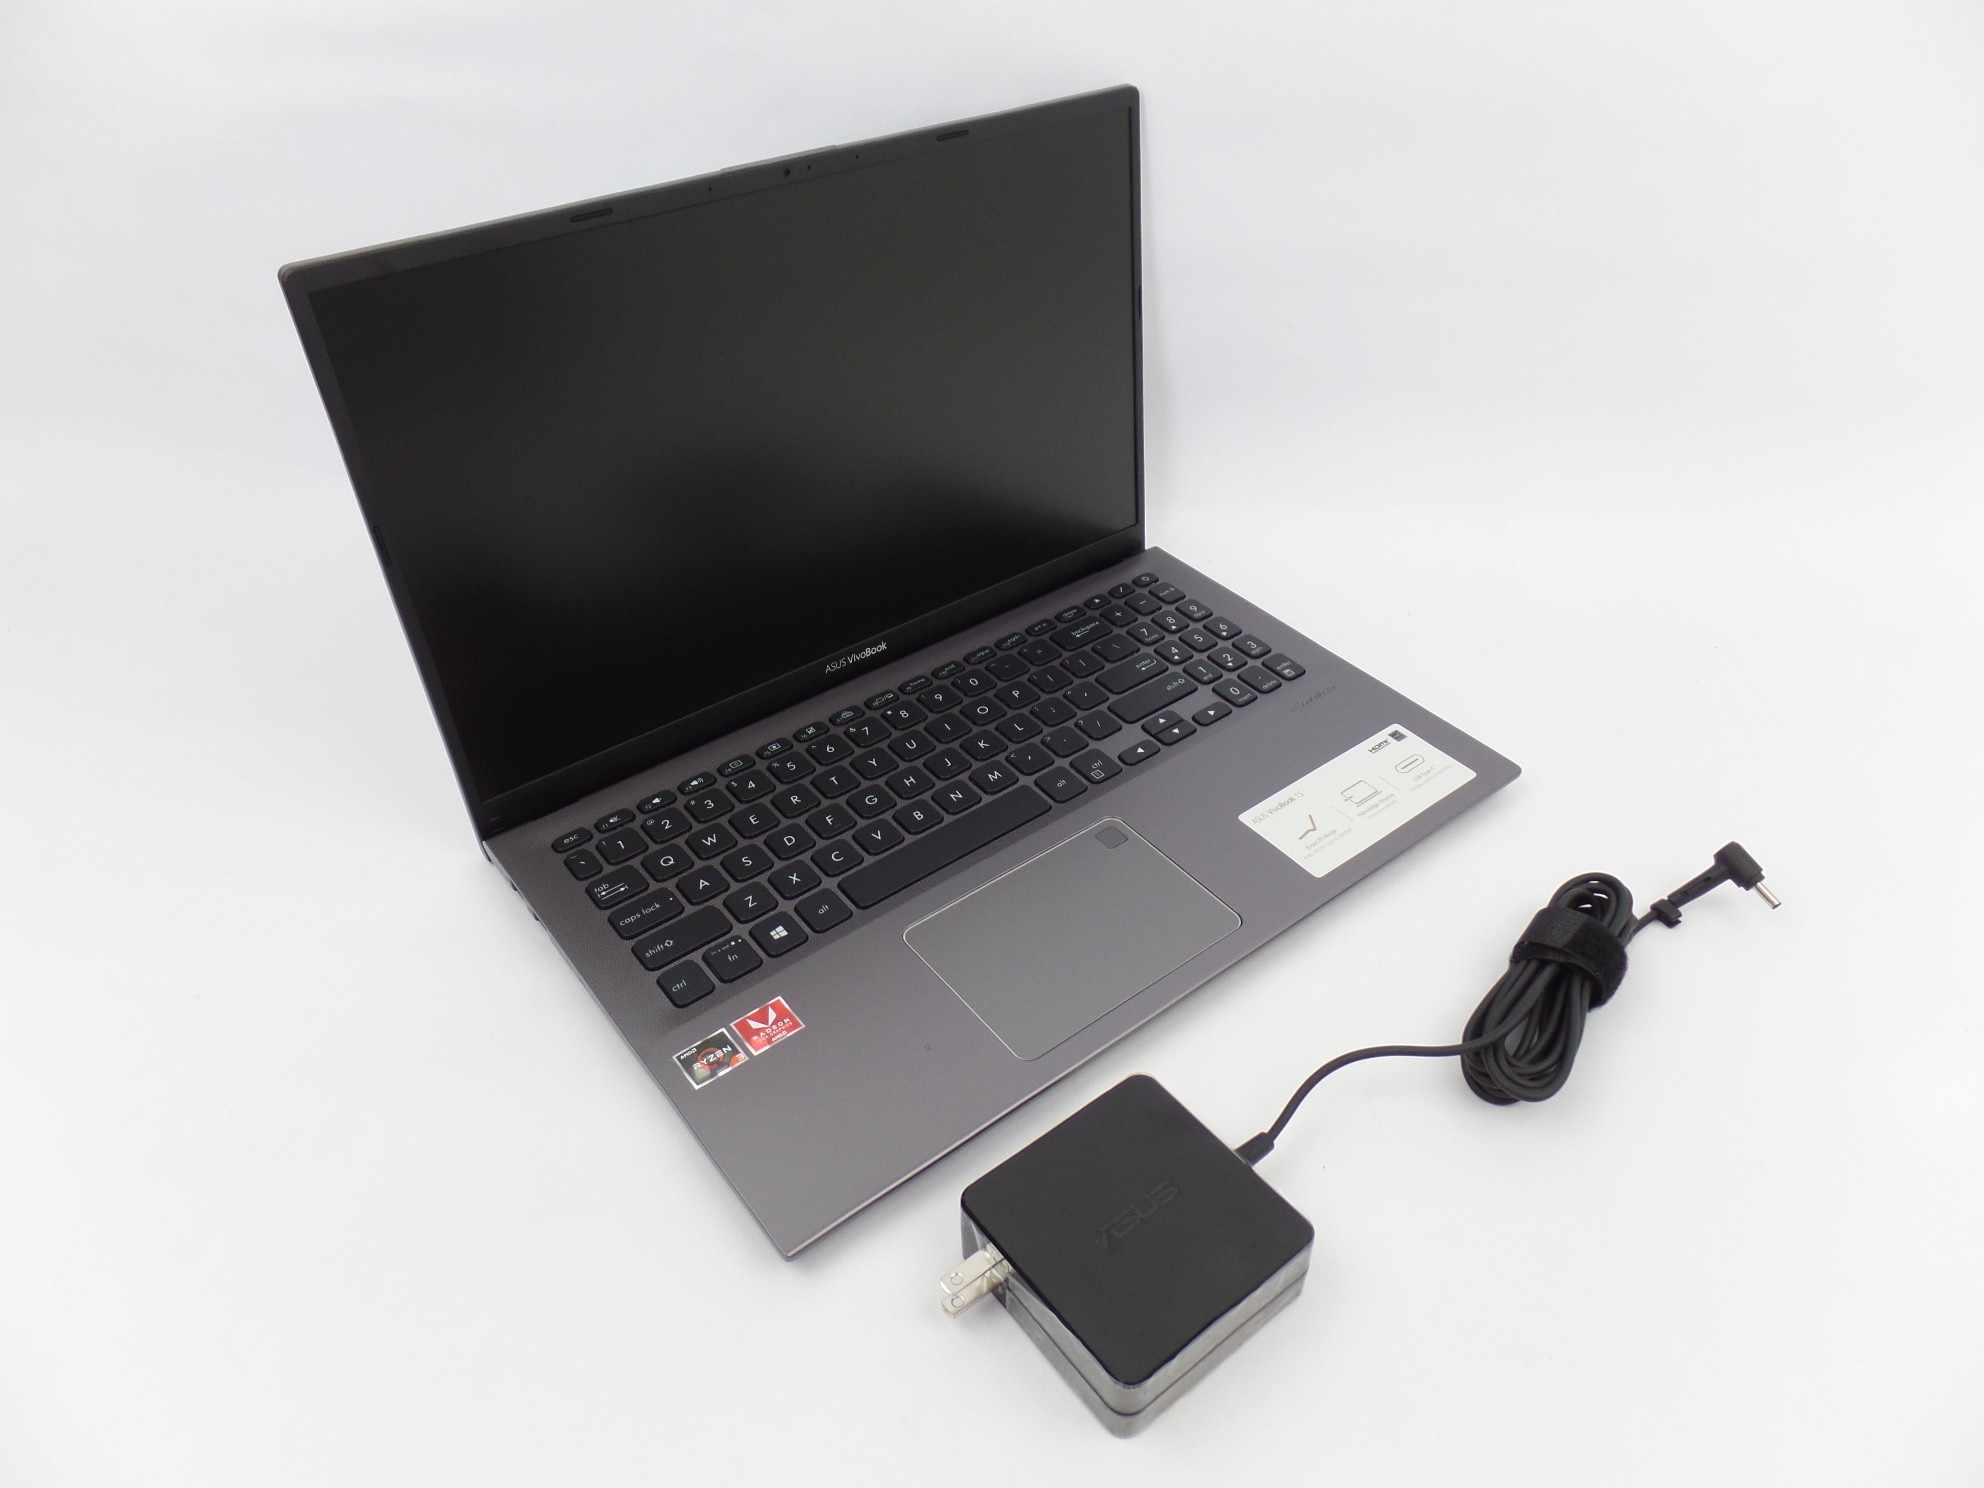 Asus VivoBook 15 F512DA 15.6" FHD Ryzen 3 3200U 2.6GHz 4GB 128GB W10H Laptop U